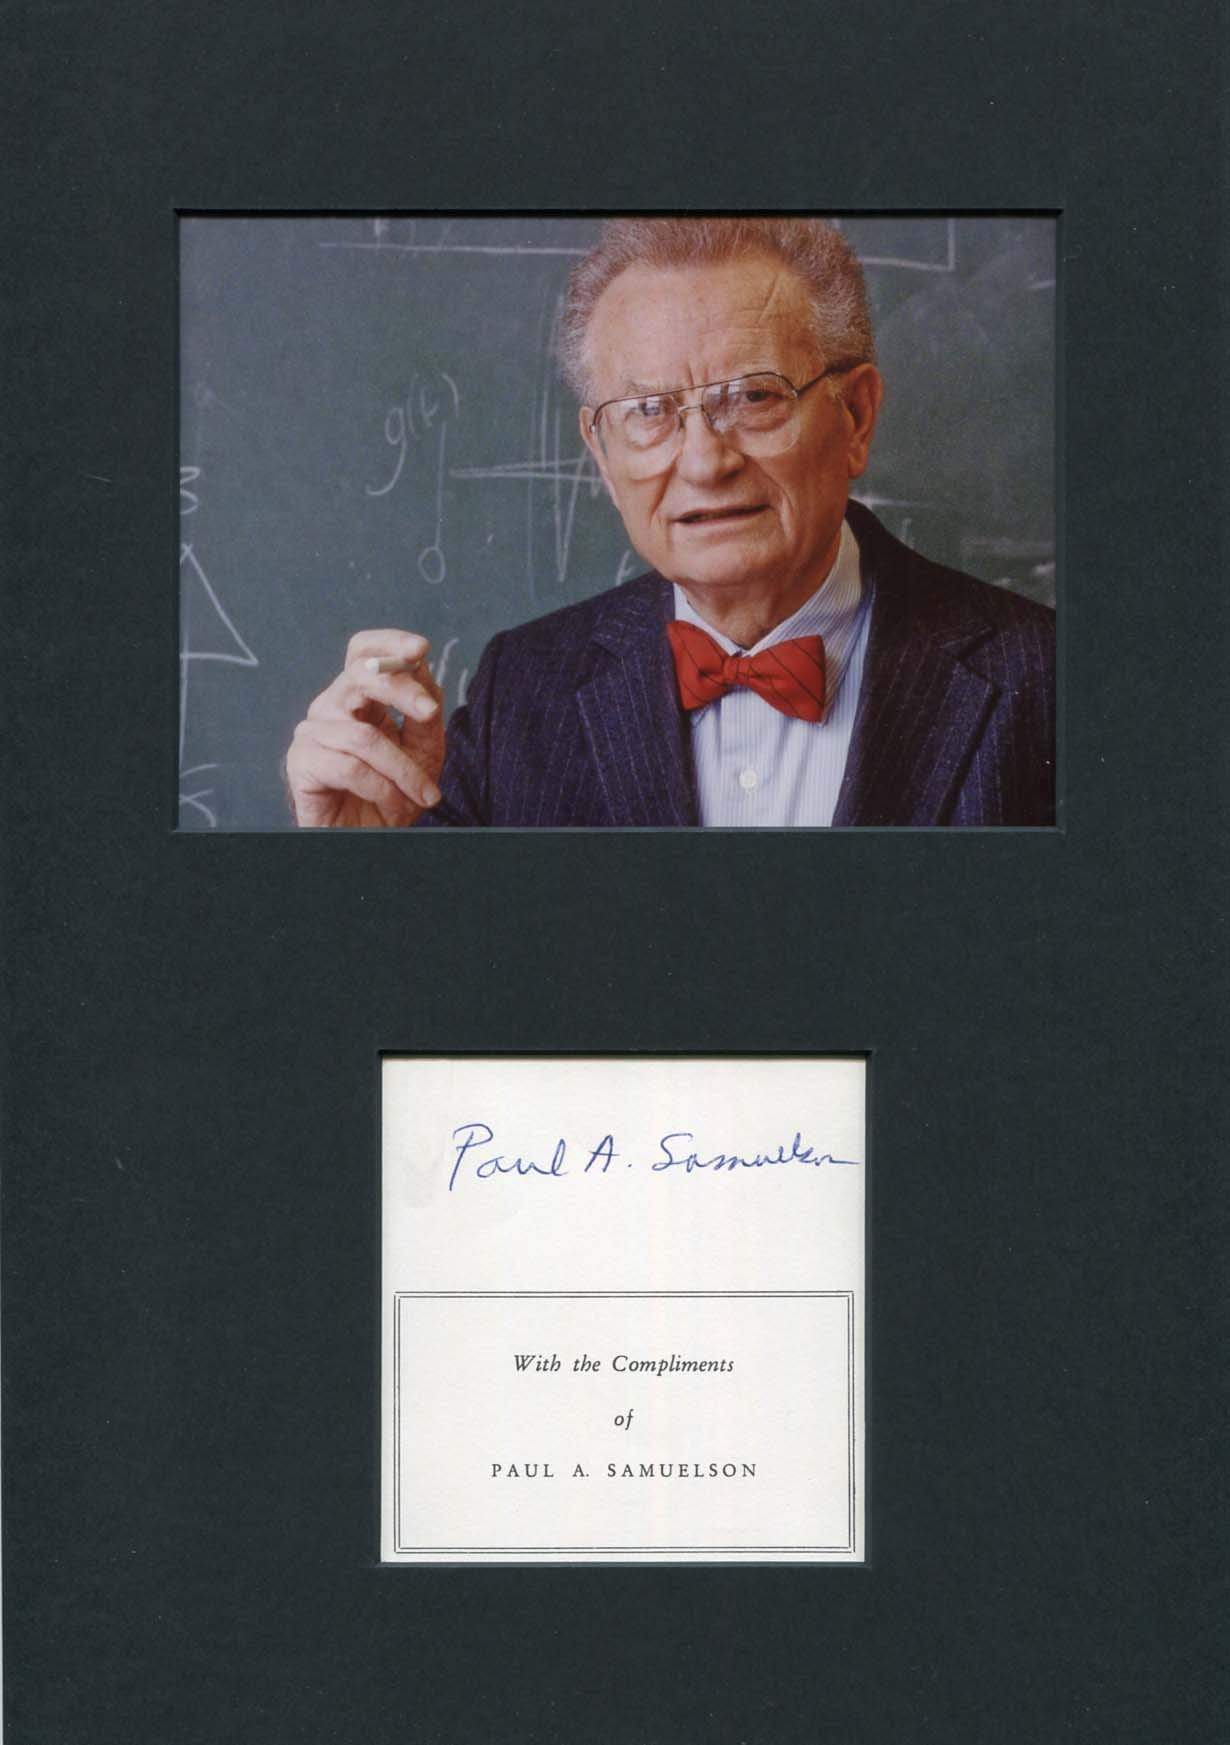 Paul A. Samuelson Autograph Autogramm | ID 7124400242837